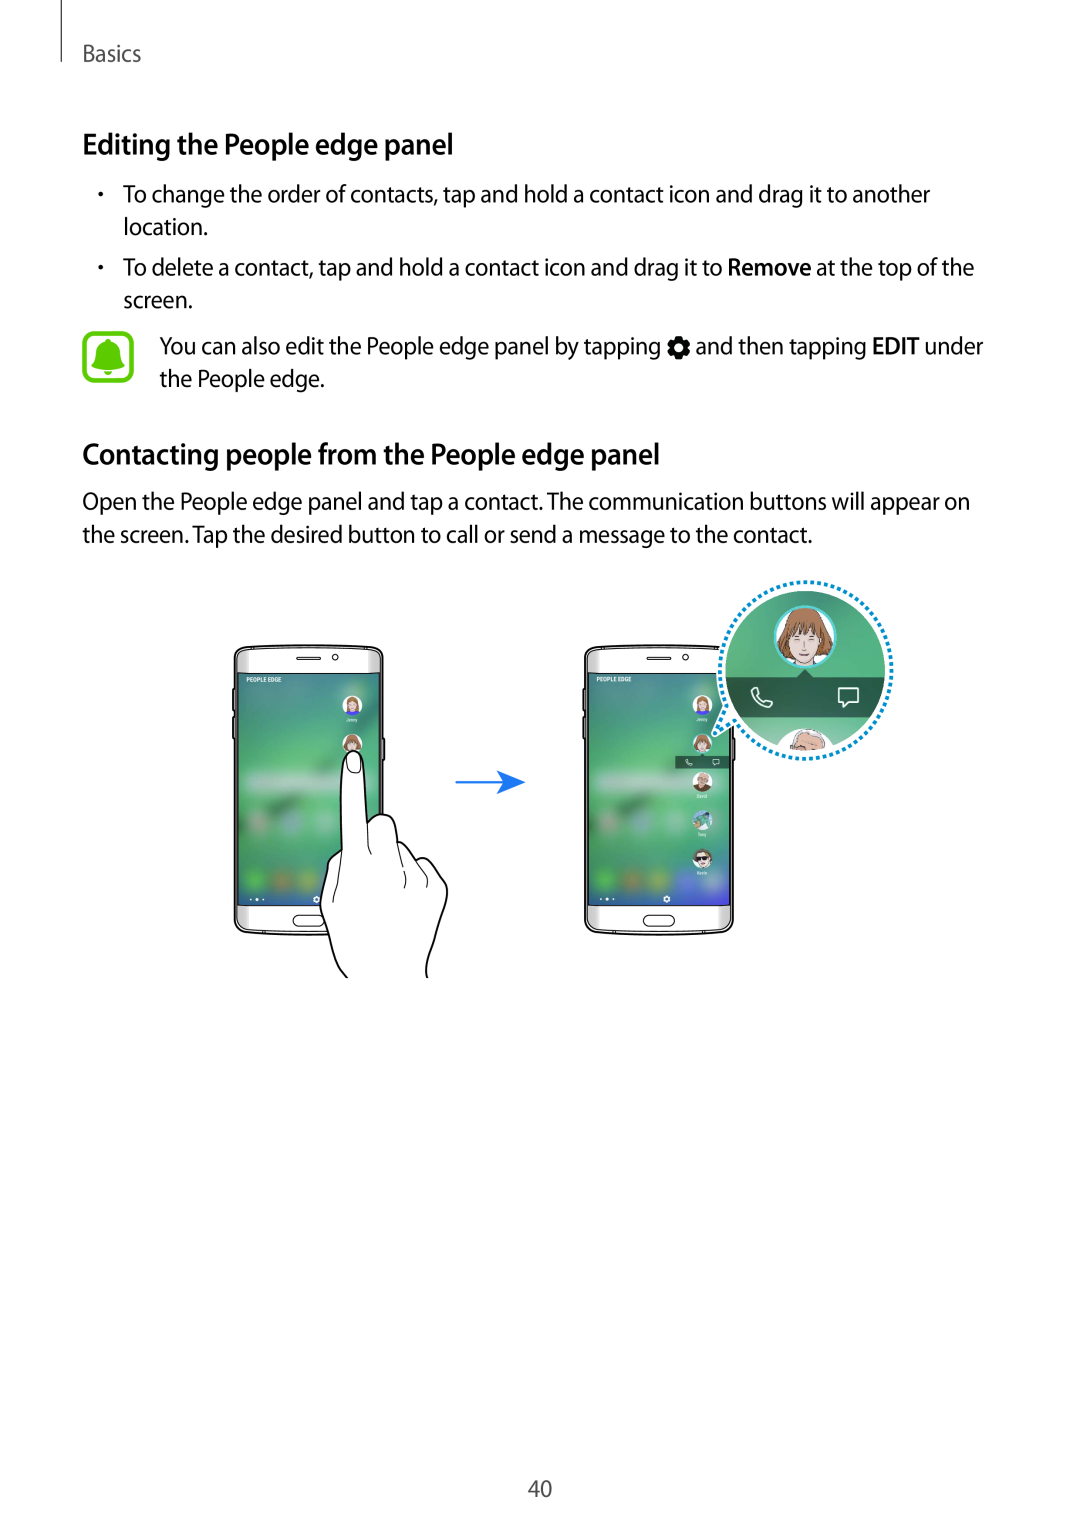 Samsung SM-G928FZDEPHE, SM-G925FZKADBT Editing the People edge panel, Contacting people from the People edge panel, Basics 